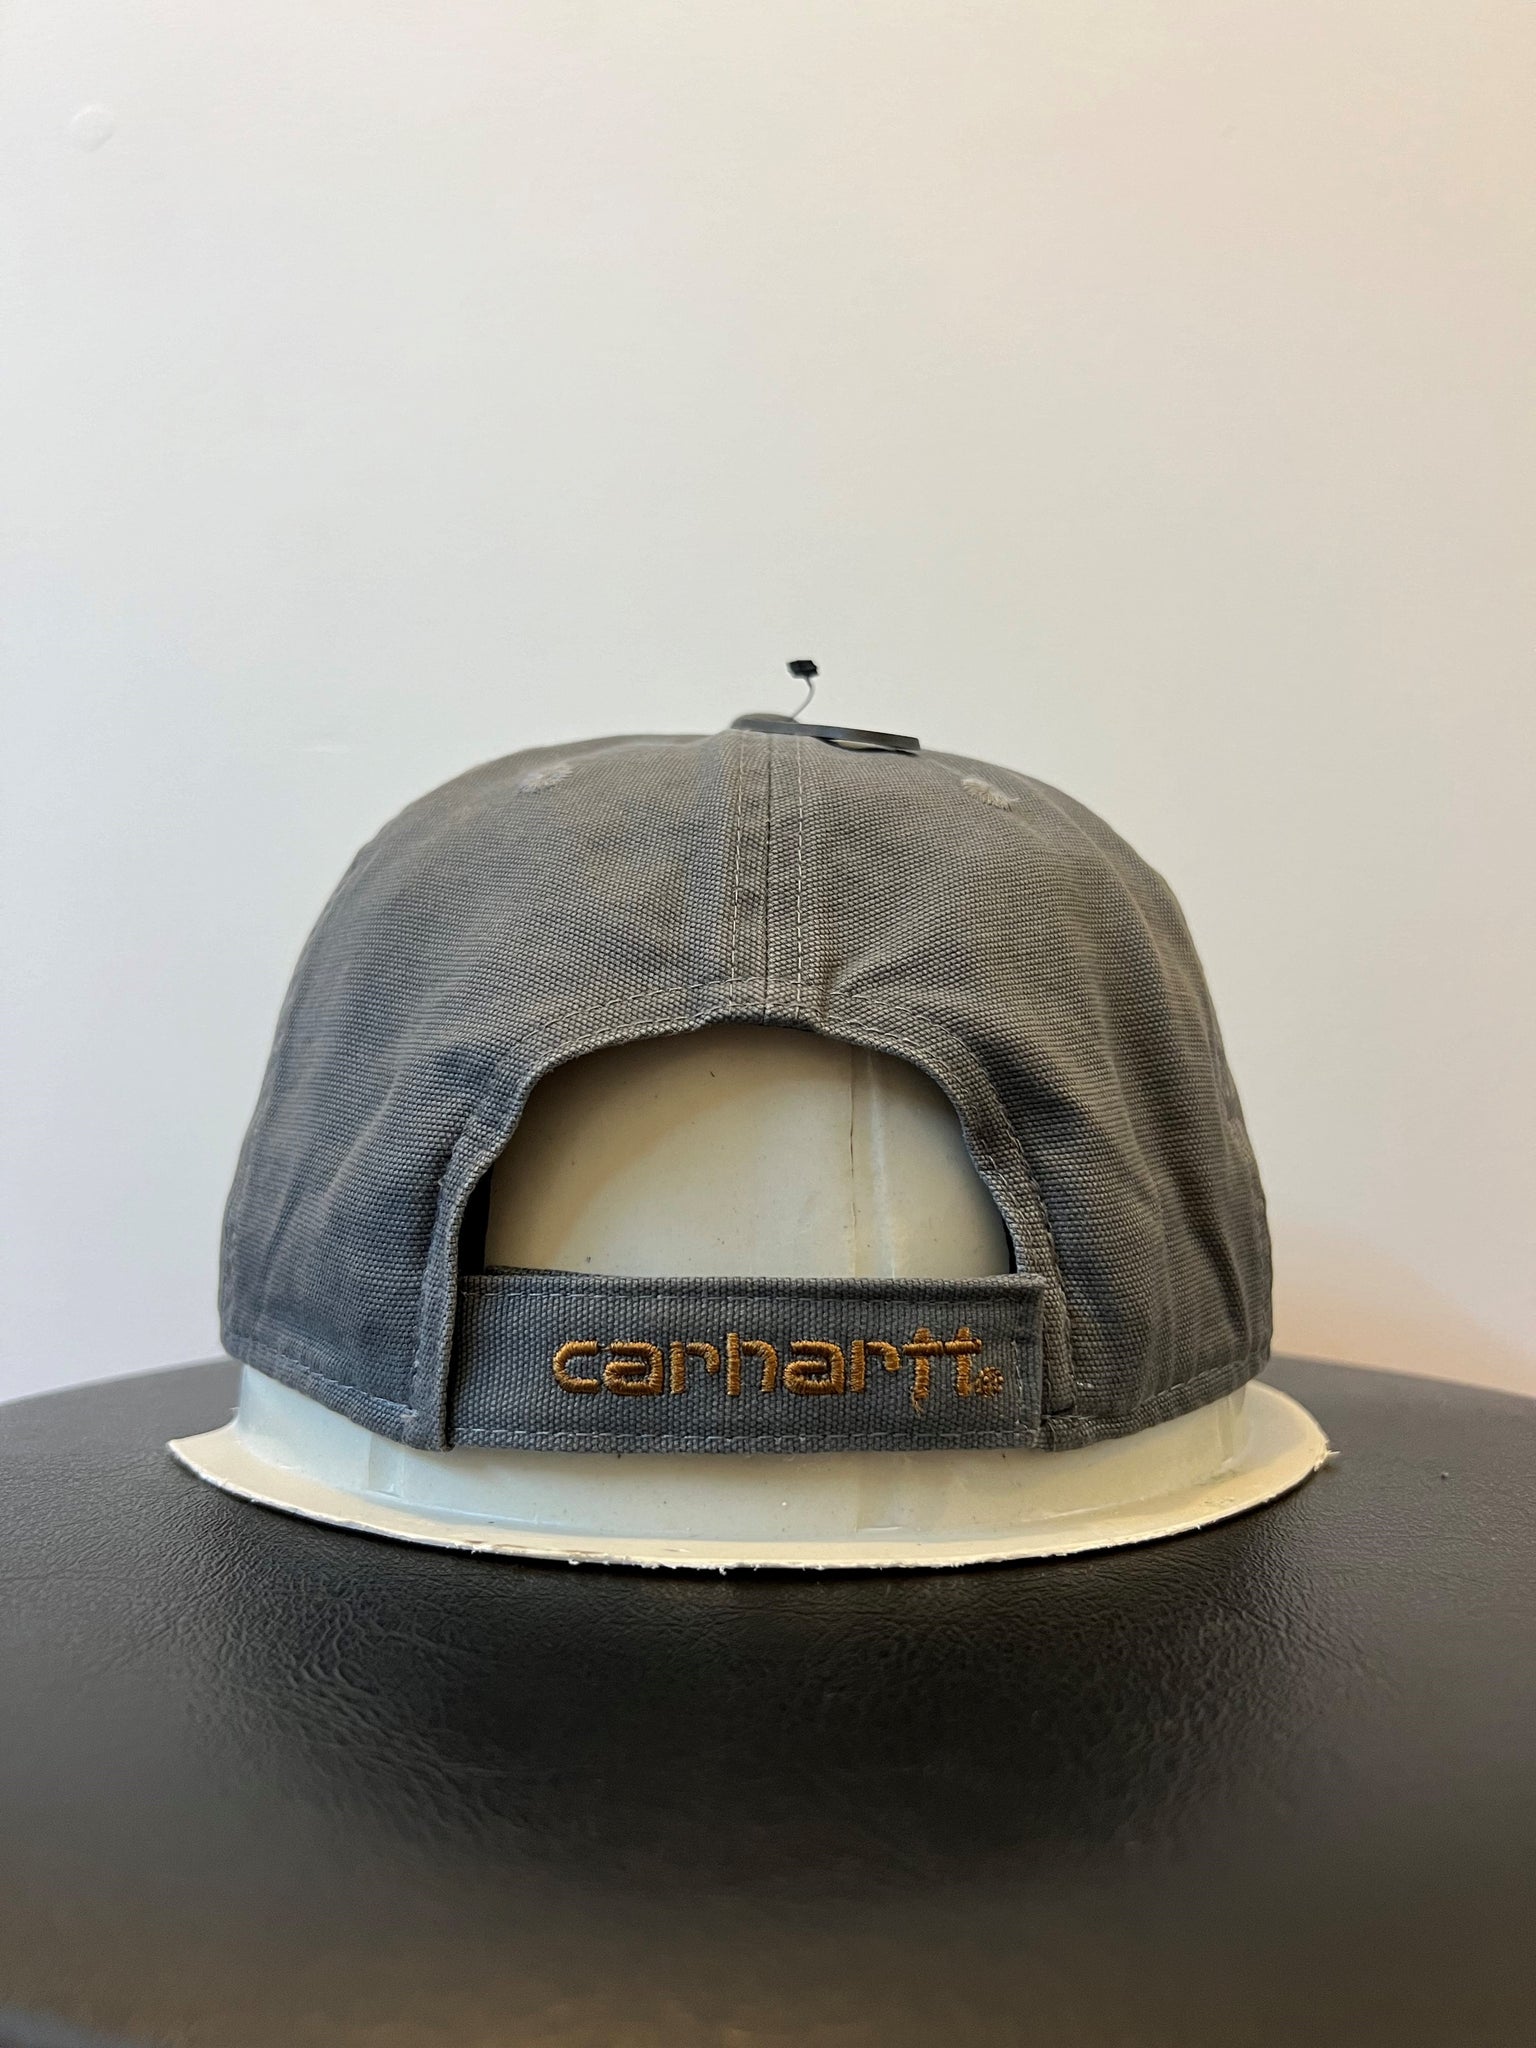 VIR Carhartt Cap - Adjustable